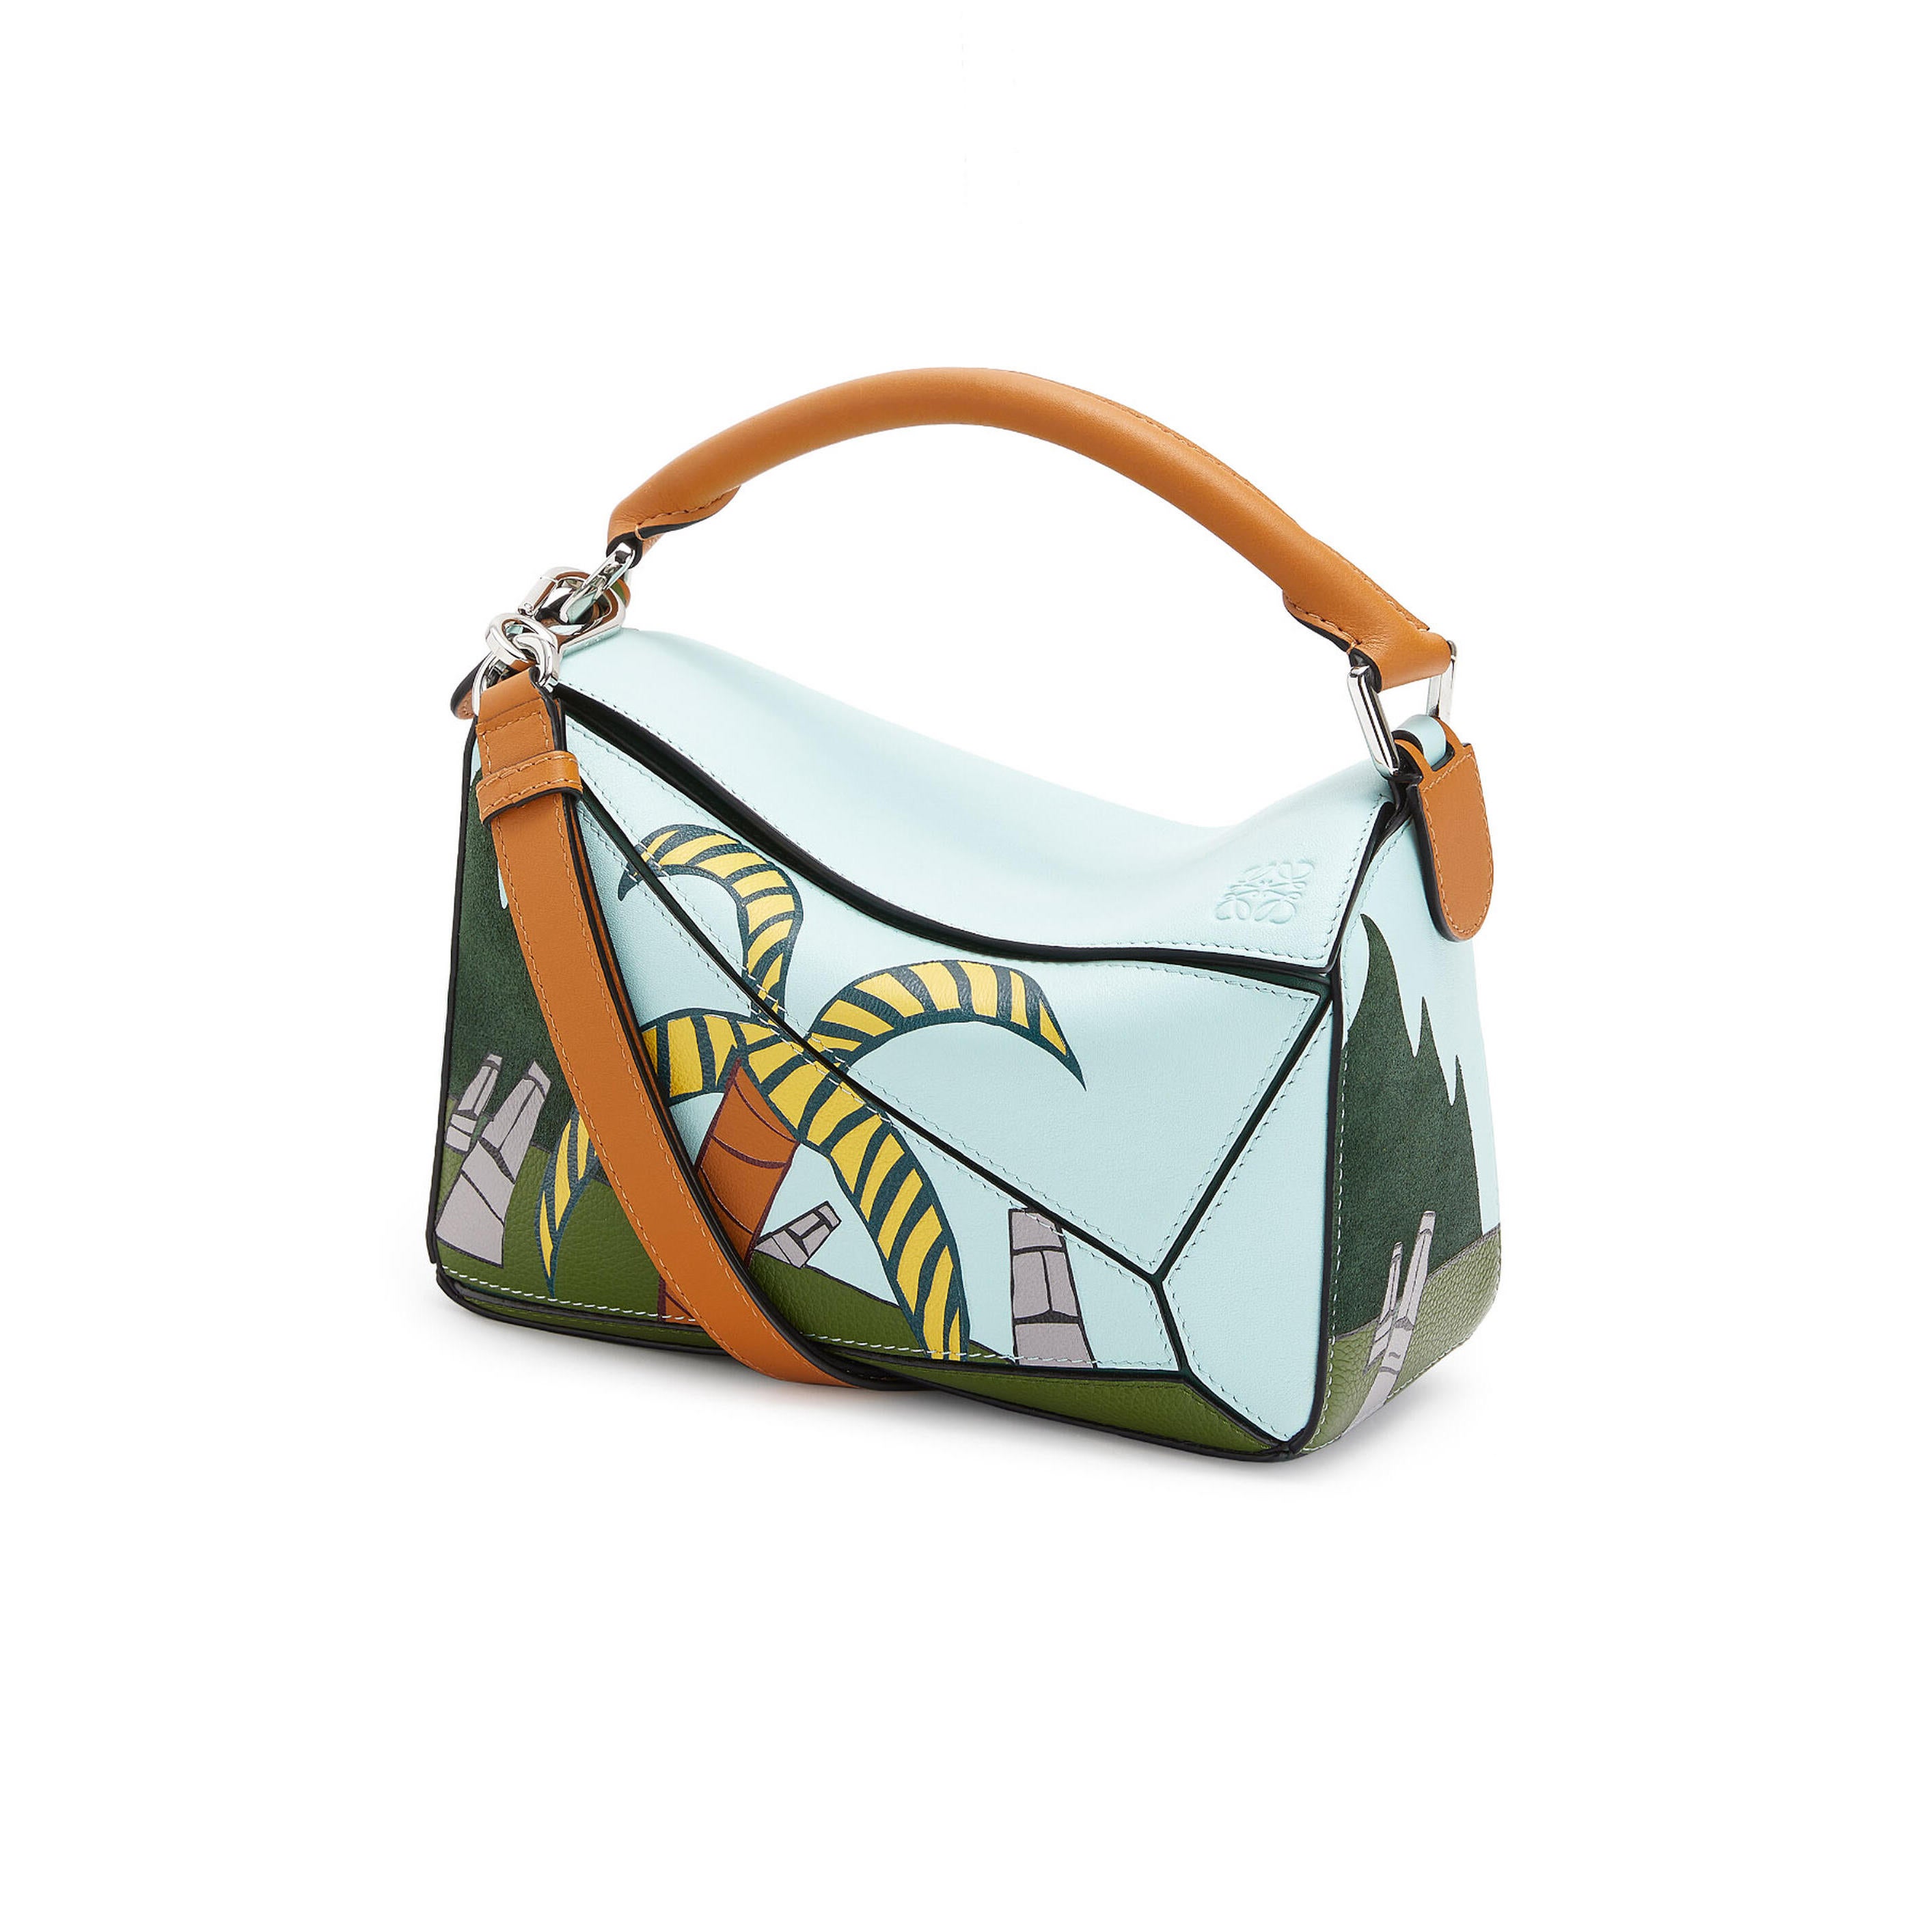 RARE Christian Louboutin Mini Elisa Glitter Structured Shoulder Bag Purse  for sale online | eBay